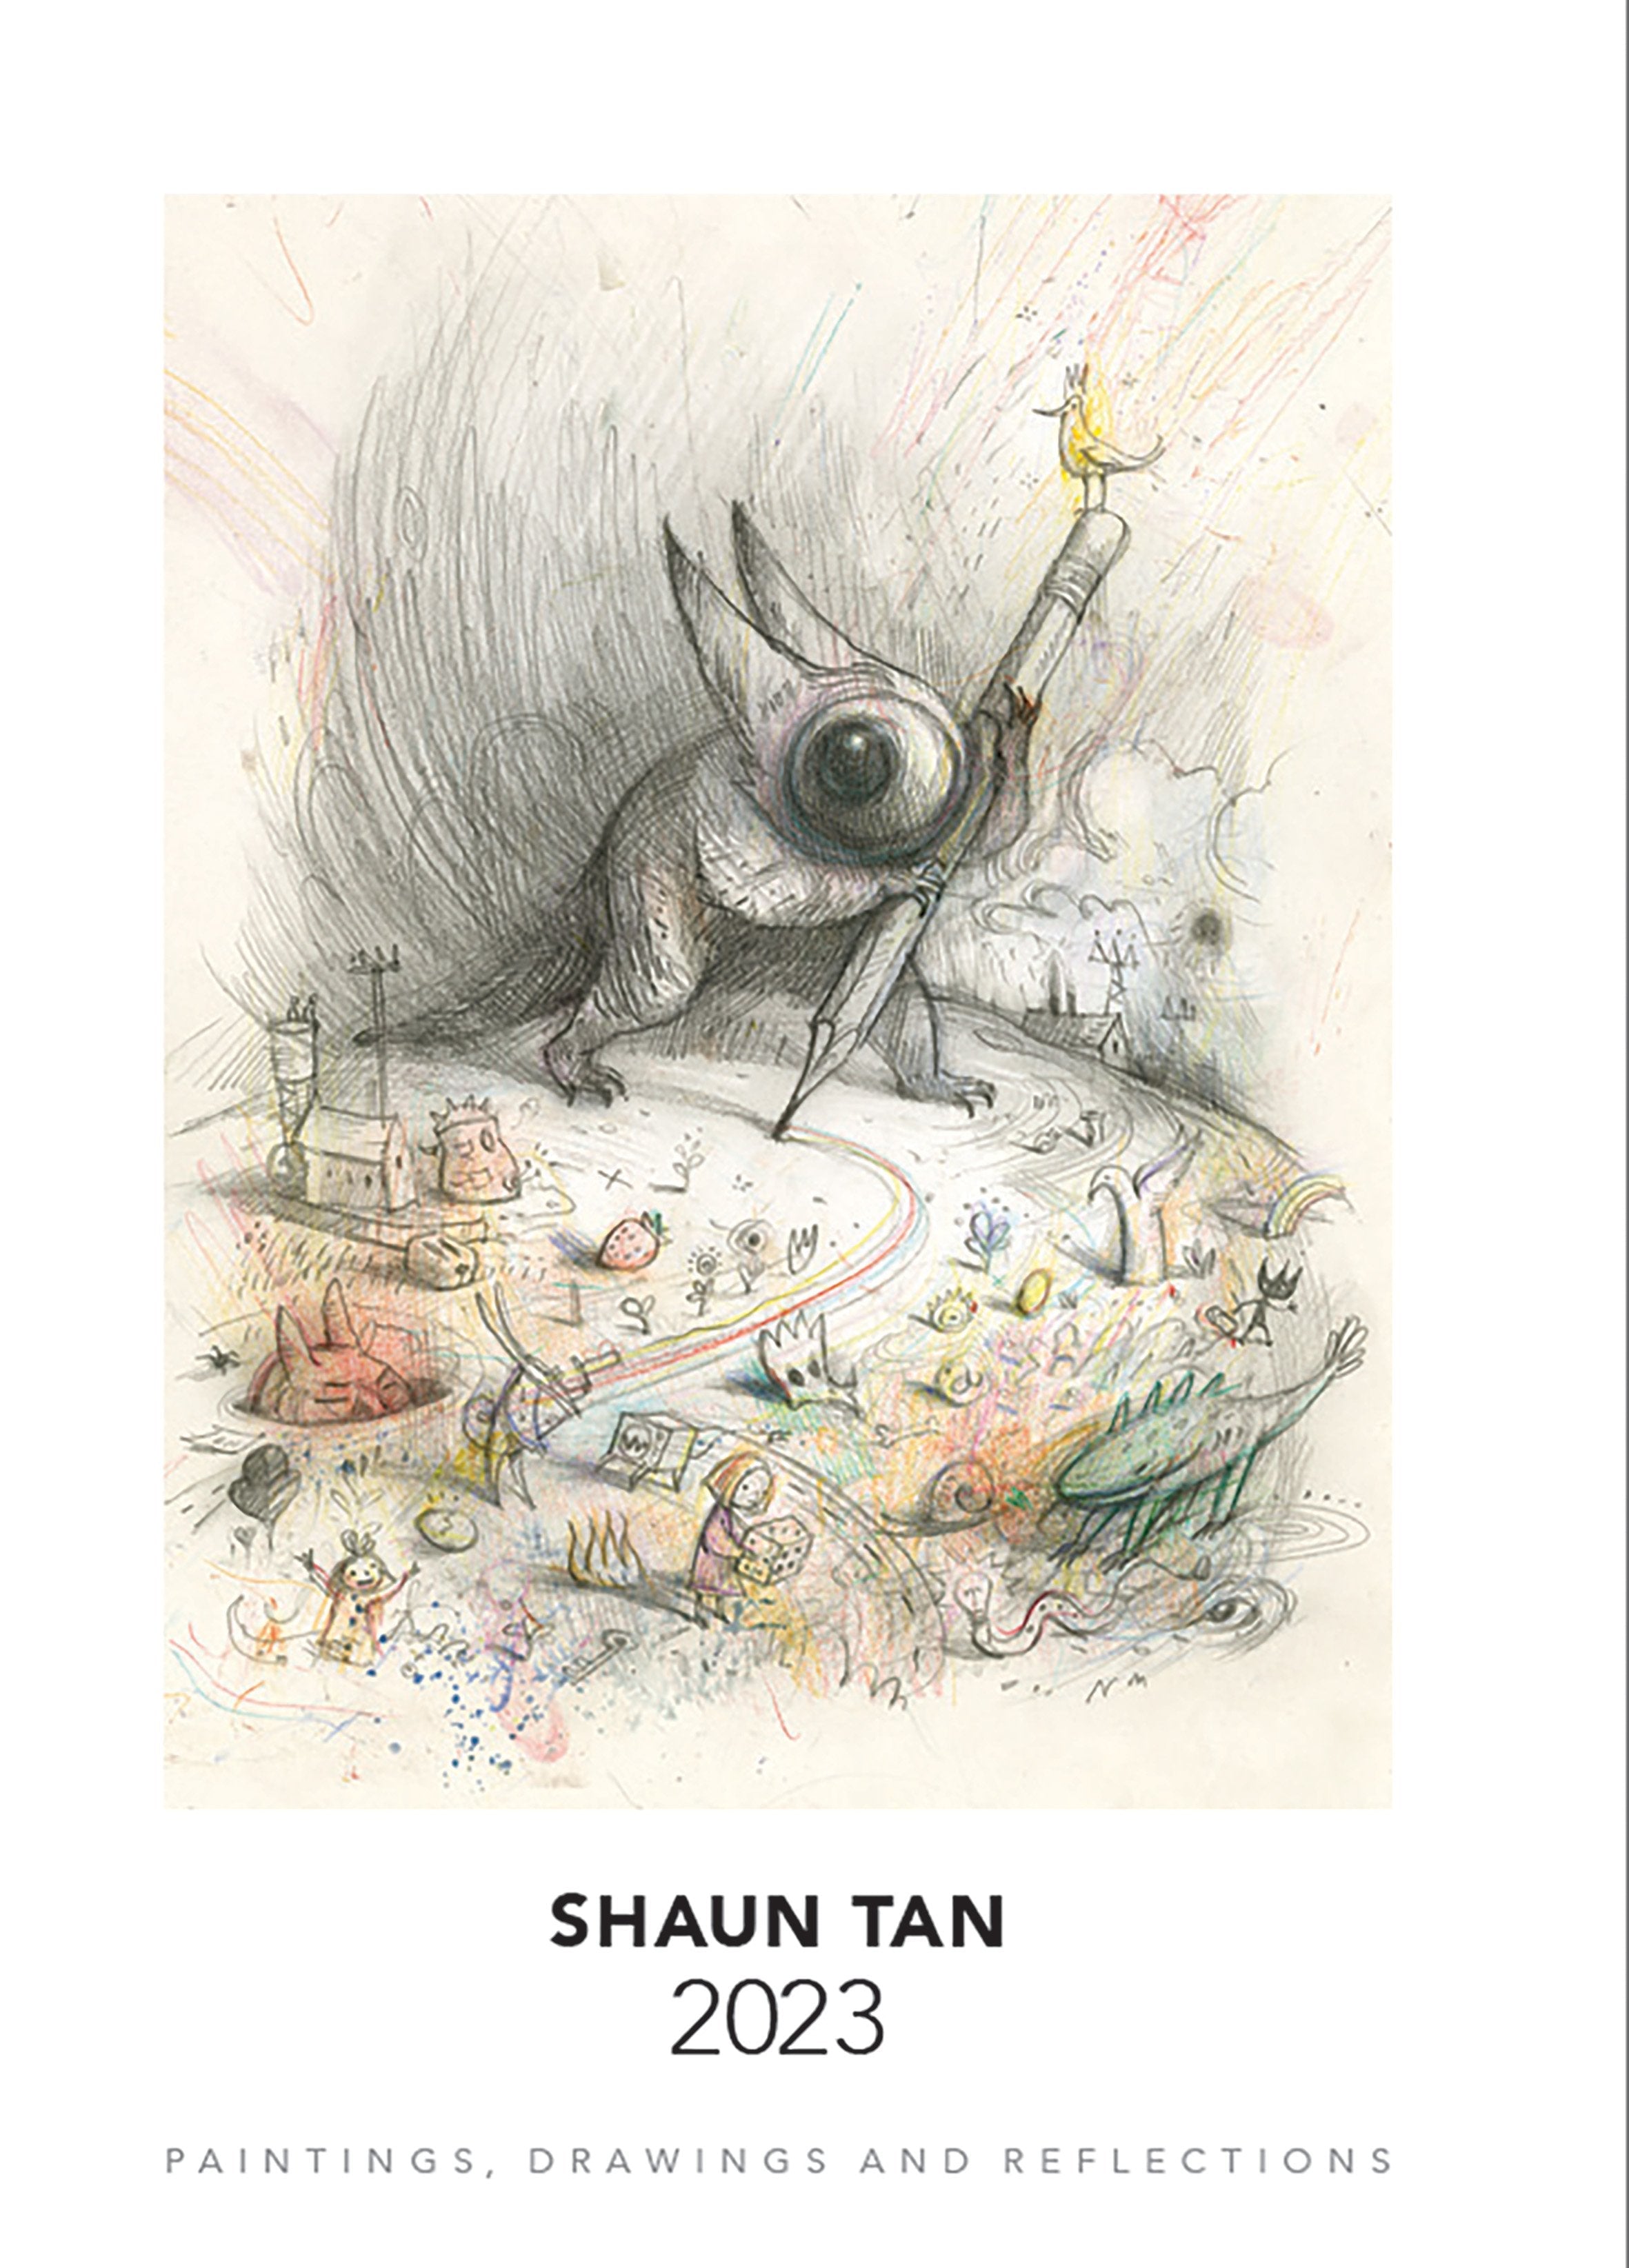 Shaun White Dimensions & Drawings